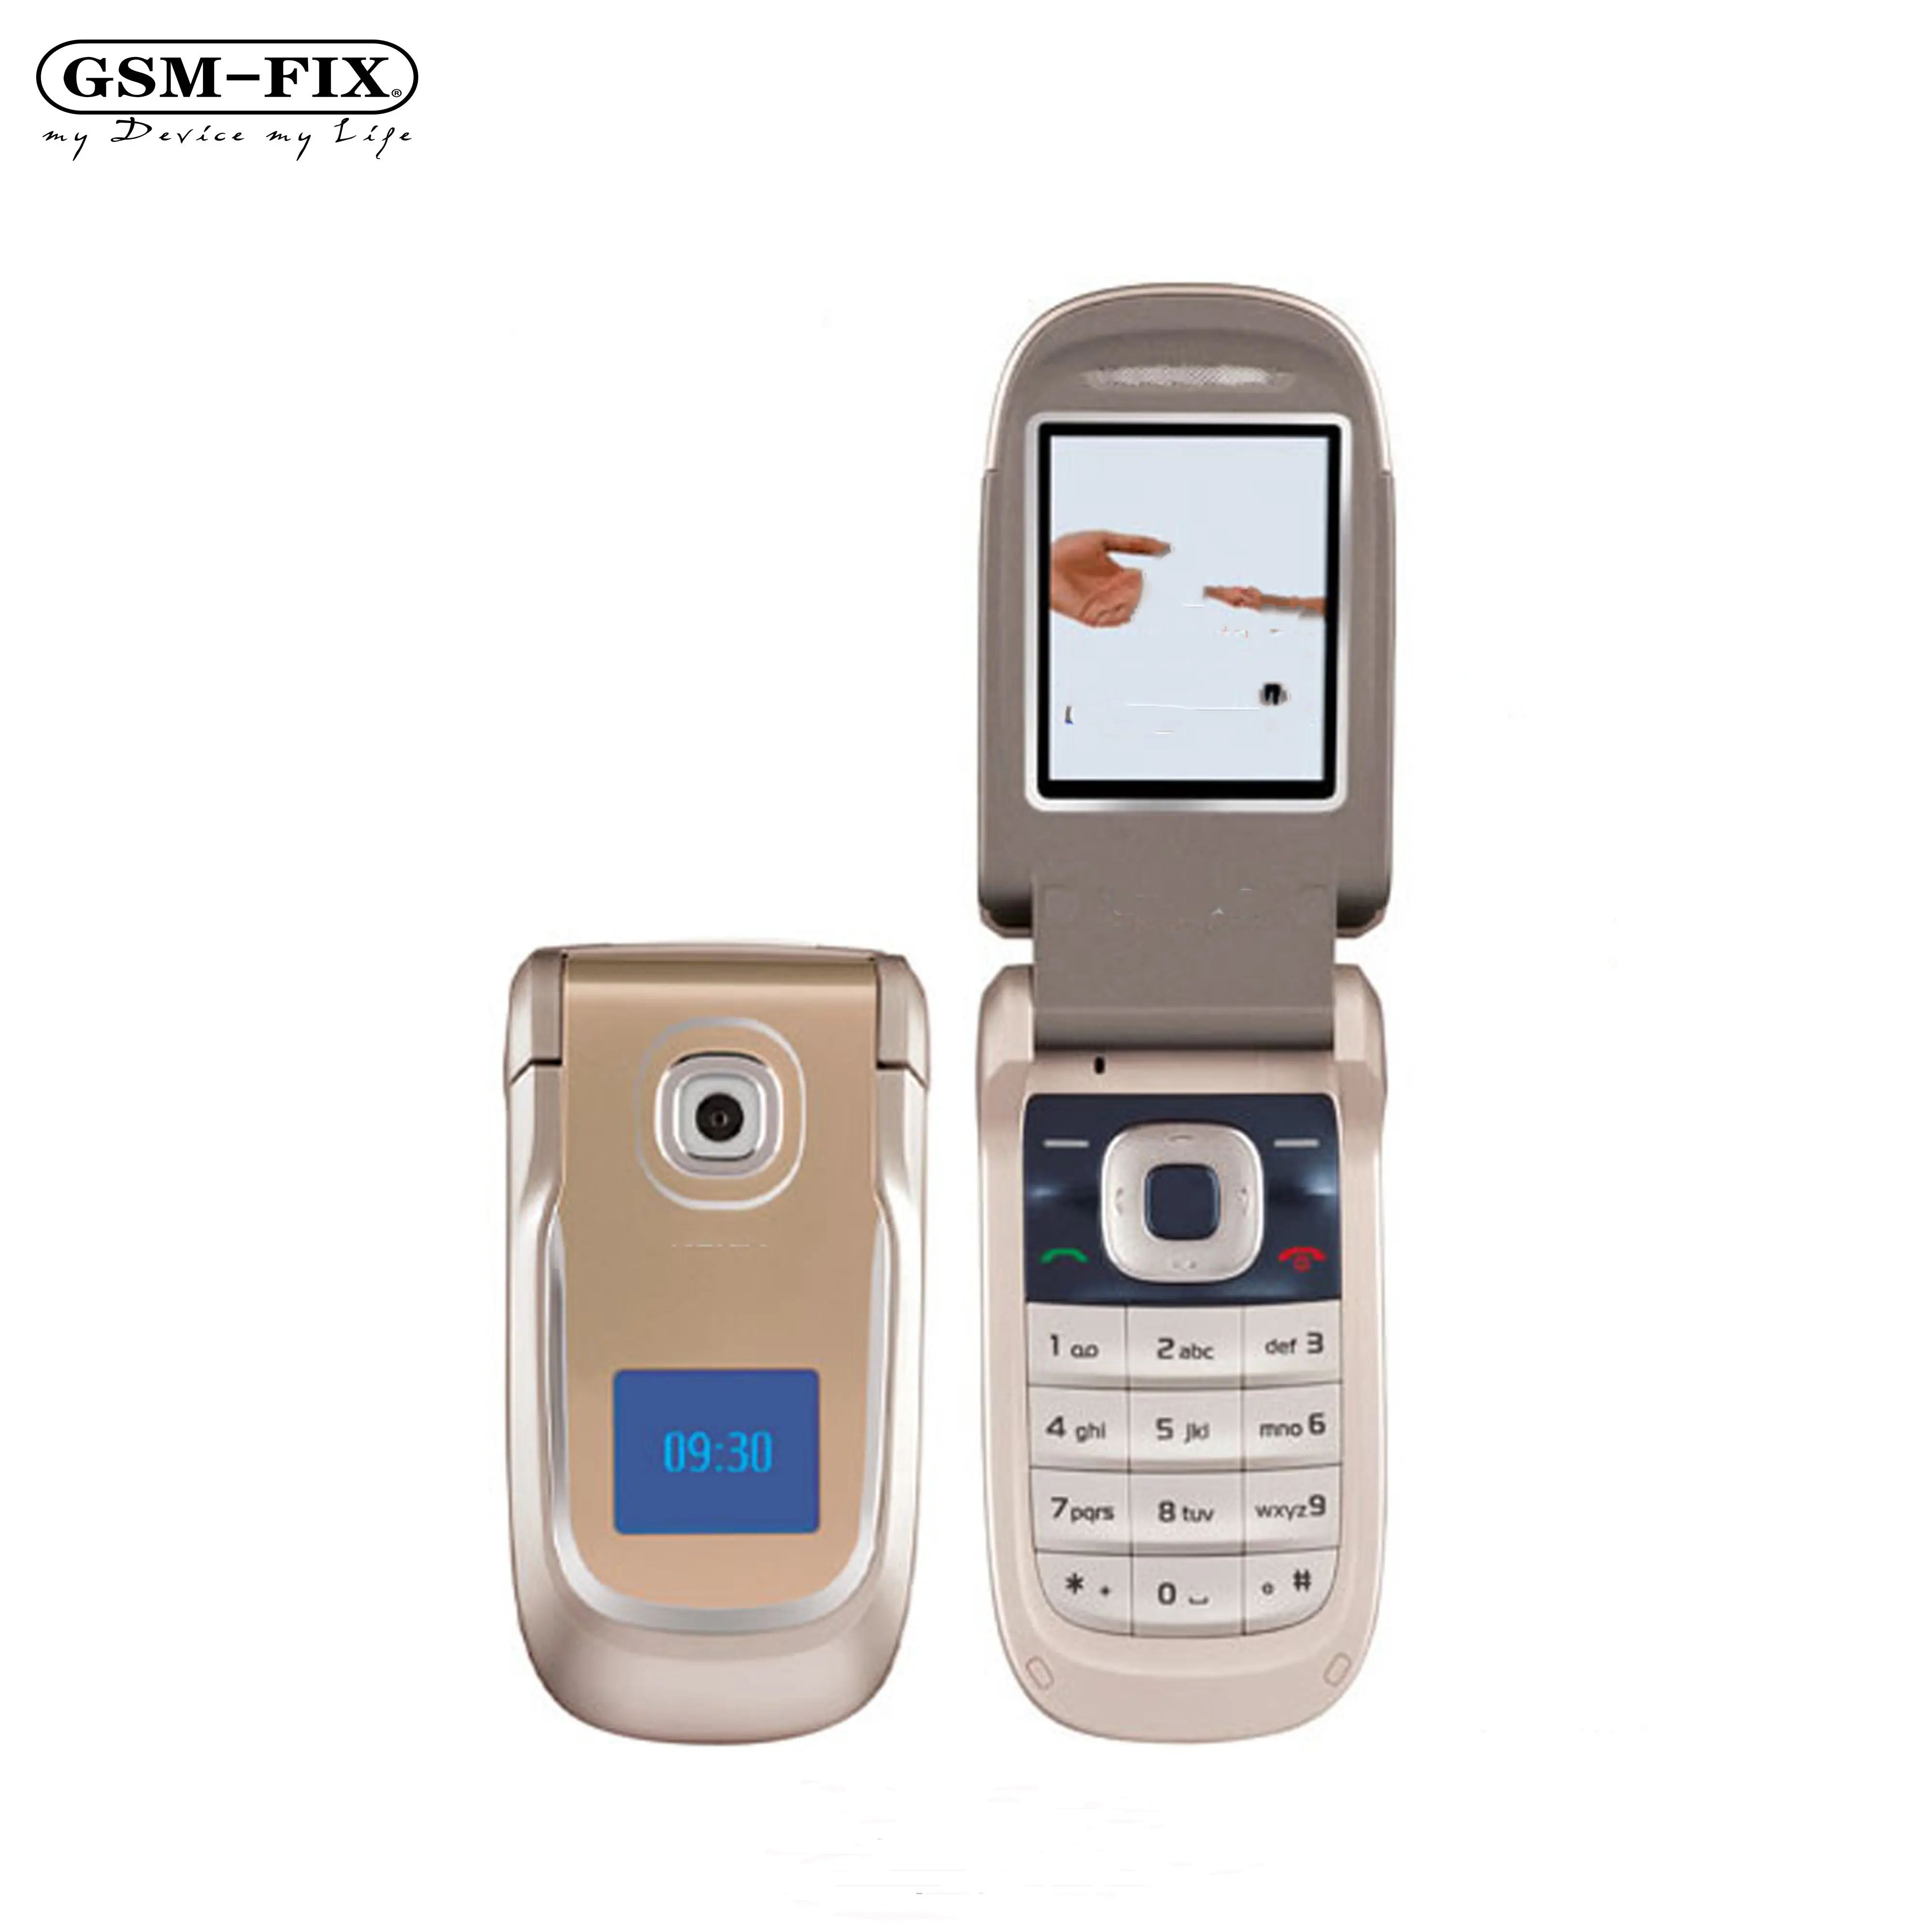 GSM-FIX מכירה לוהטת מקורי במפעל סמארטפון זול קלאסי Flip נייד טלפון סלולרי עבור Nokia 2760